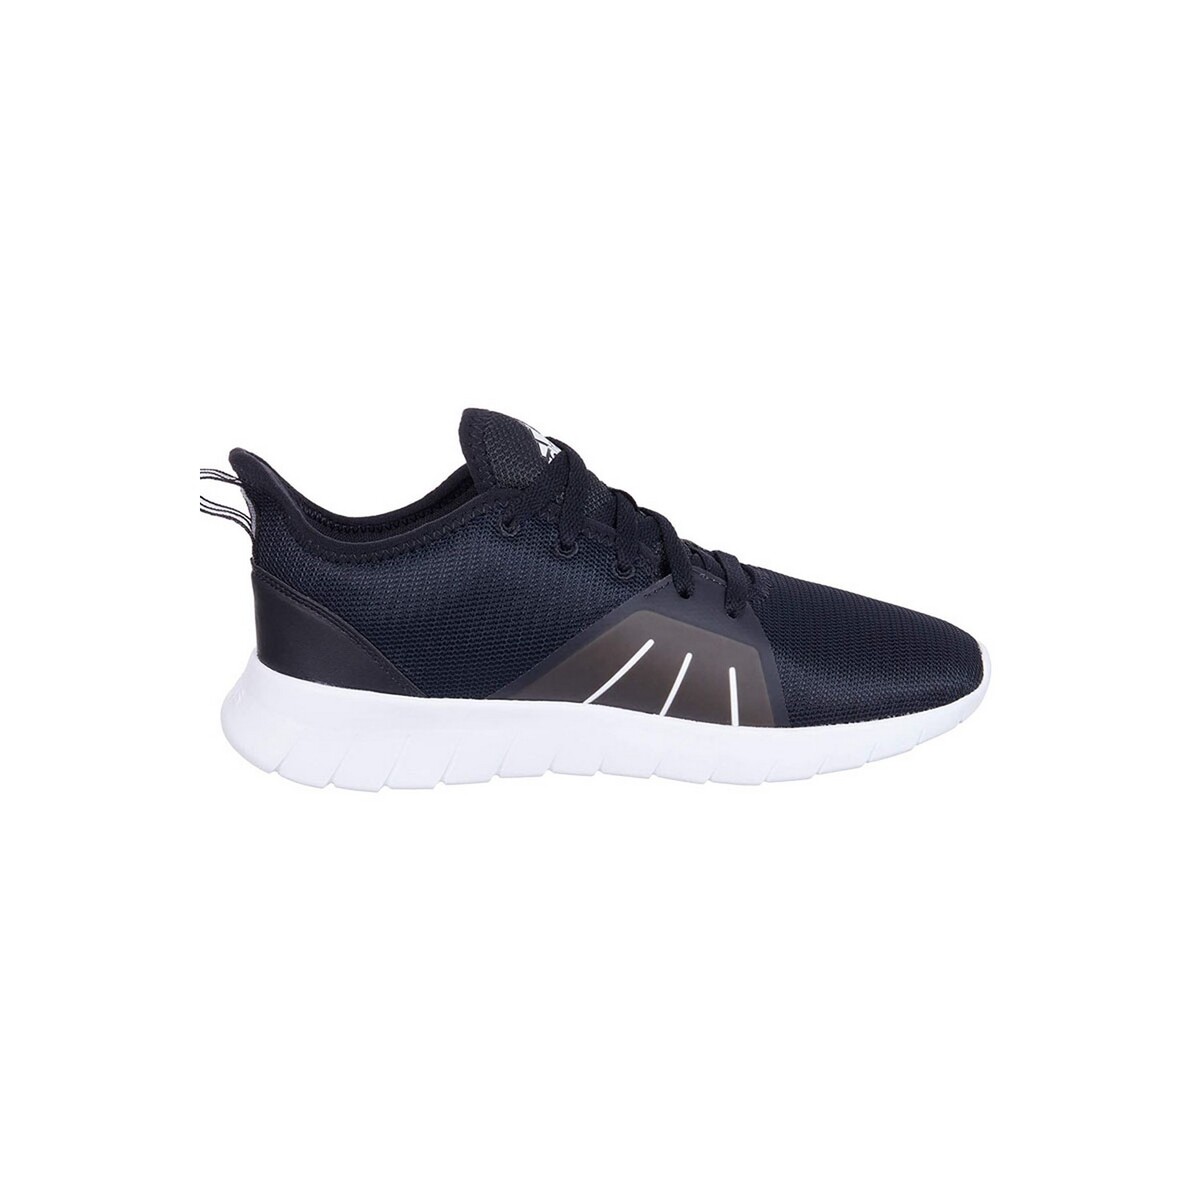 Adidas Mens Sports Shoes FW1676, 8